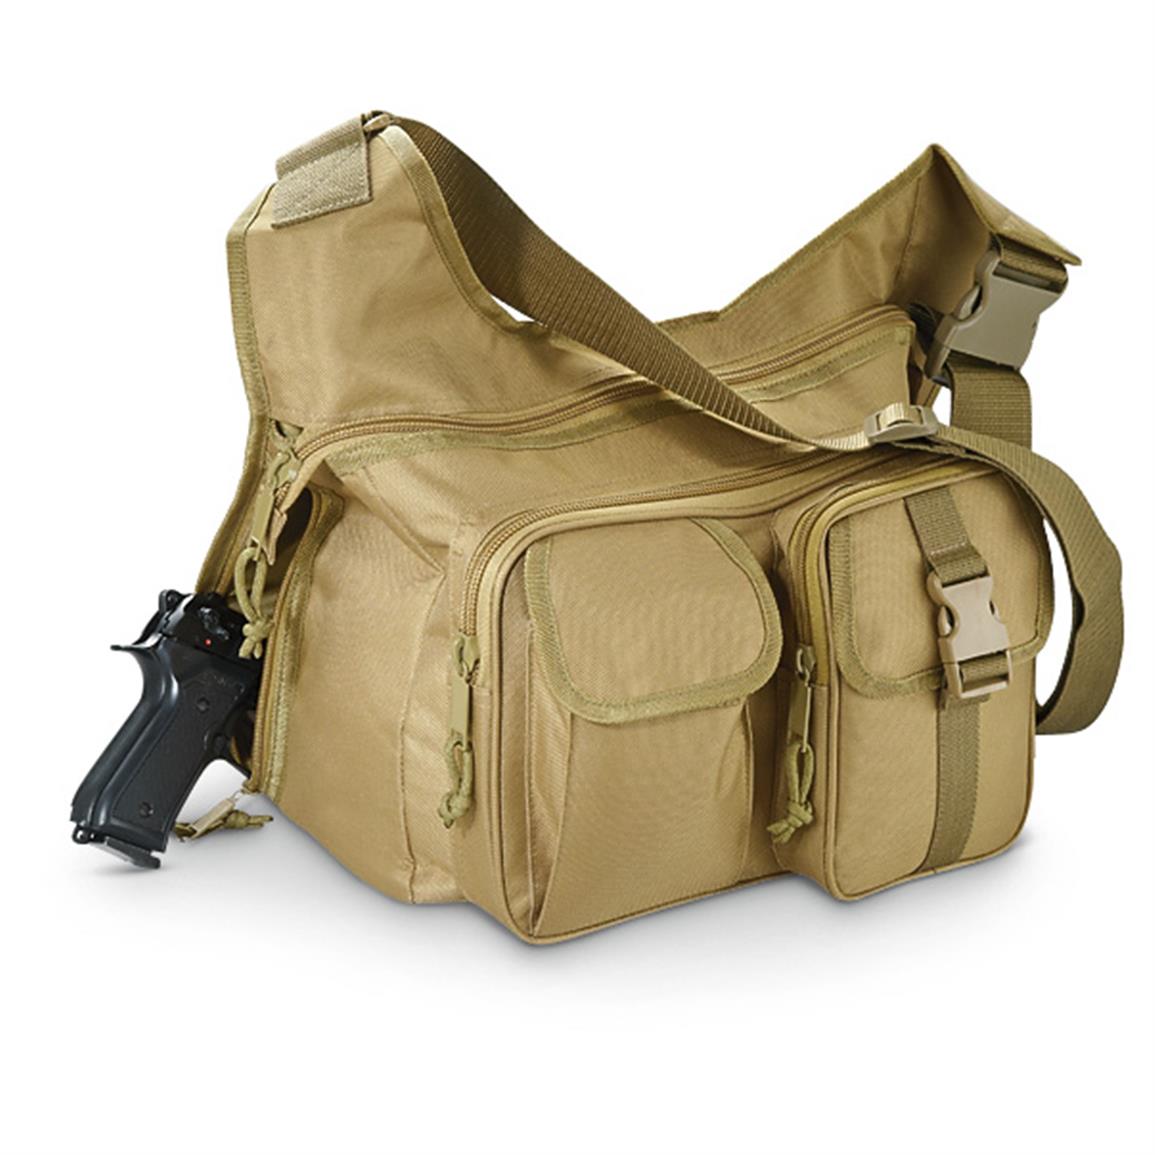 Concealed Carry Shoulder Sling Bag - 281912, Tote Bags at Sportsman's Guide